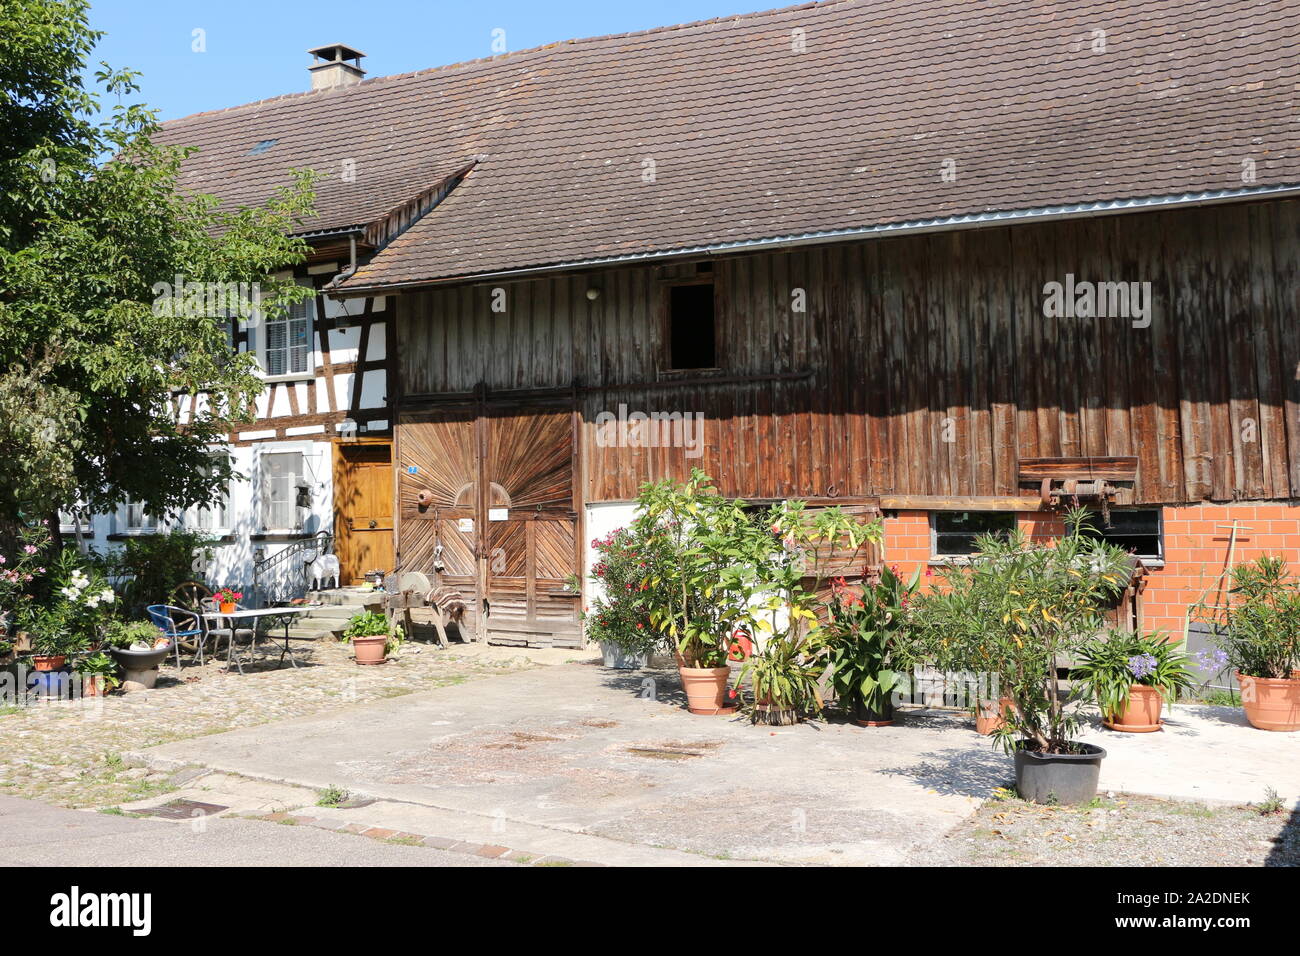 Bauernhof Schweiz High Resolution Stock Photography and Images - Alamy